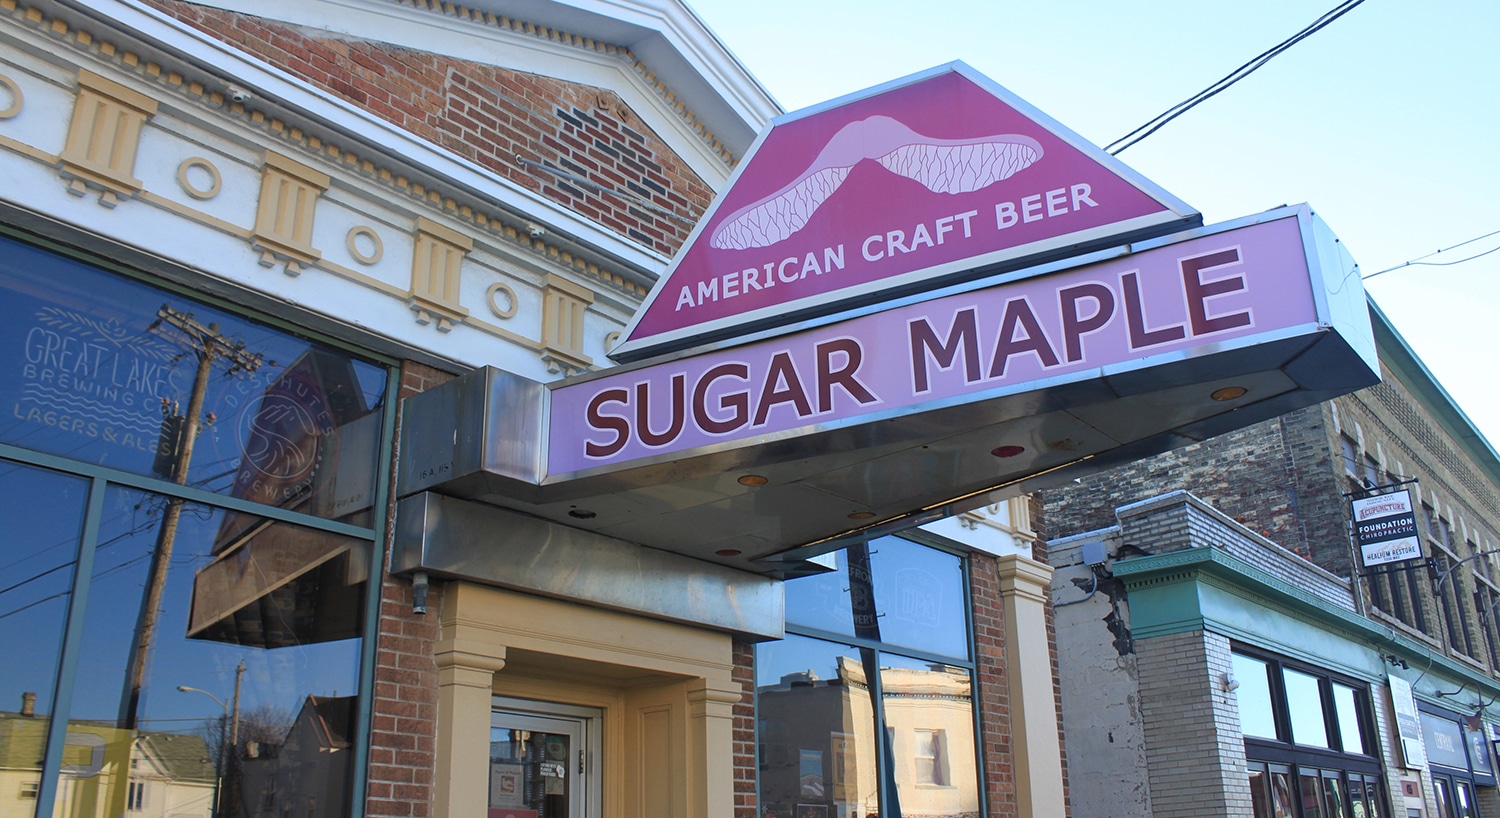 Sugar Maple American Craft Beer bar sign